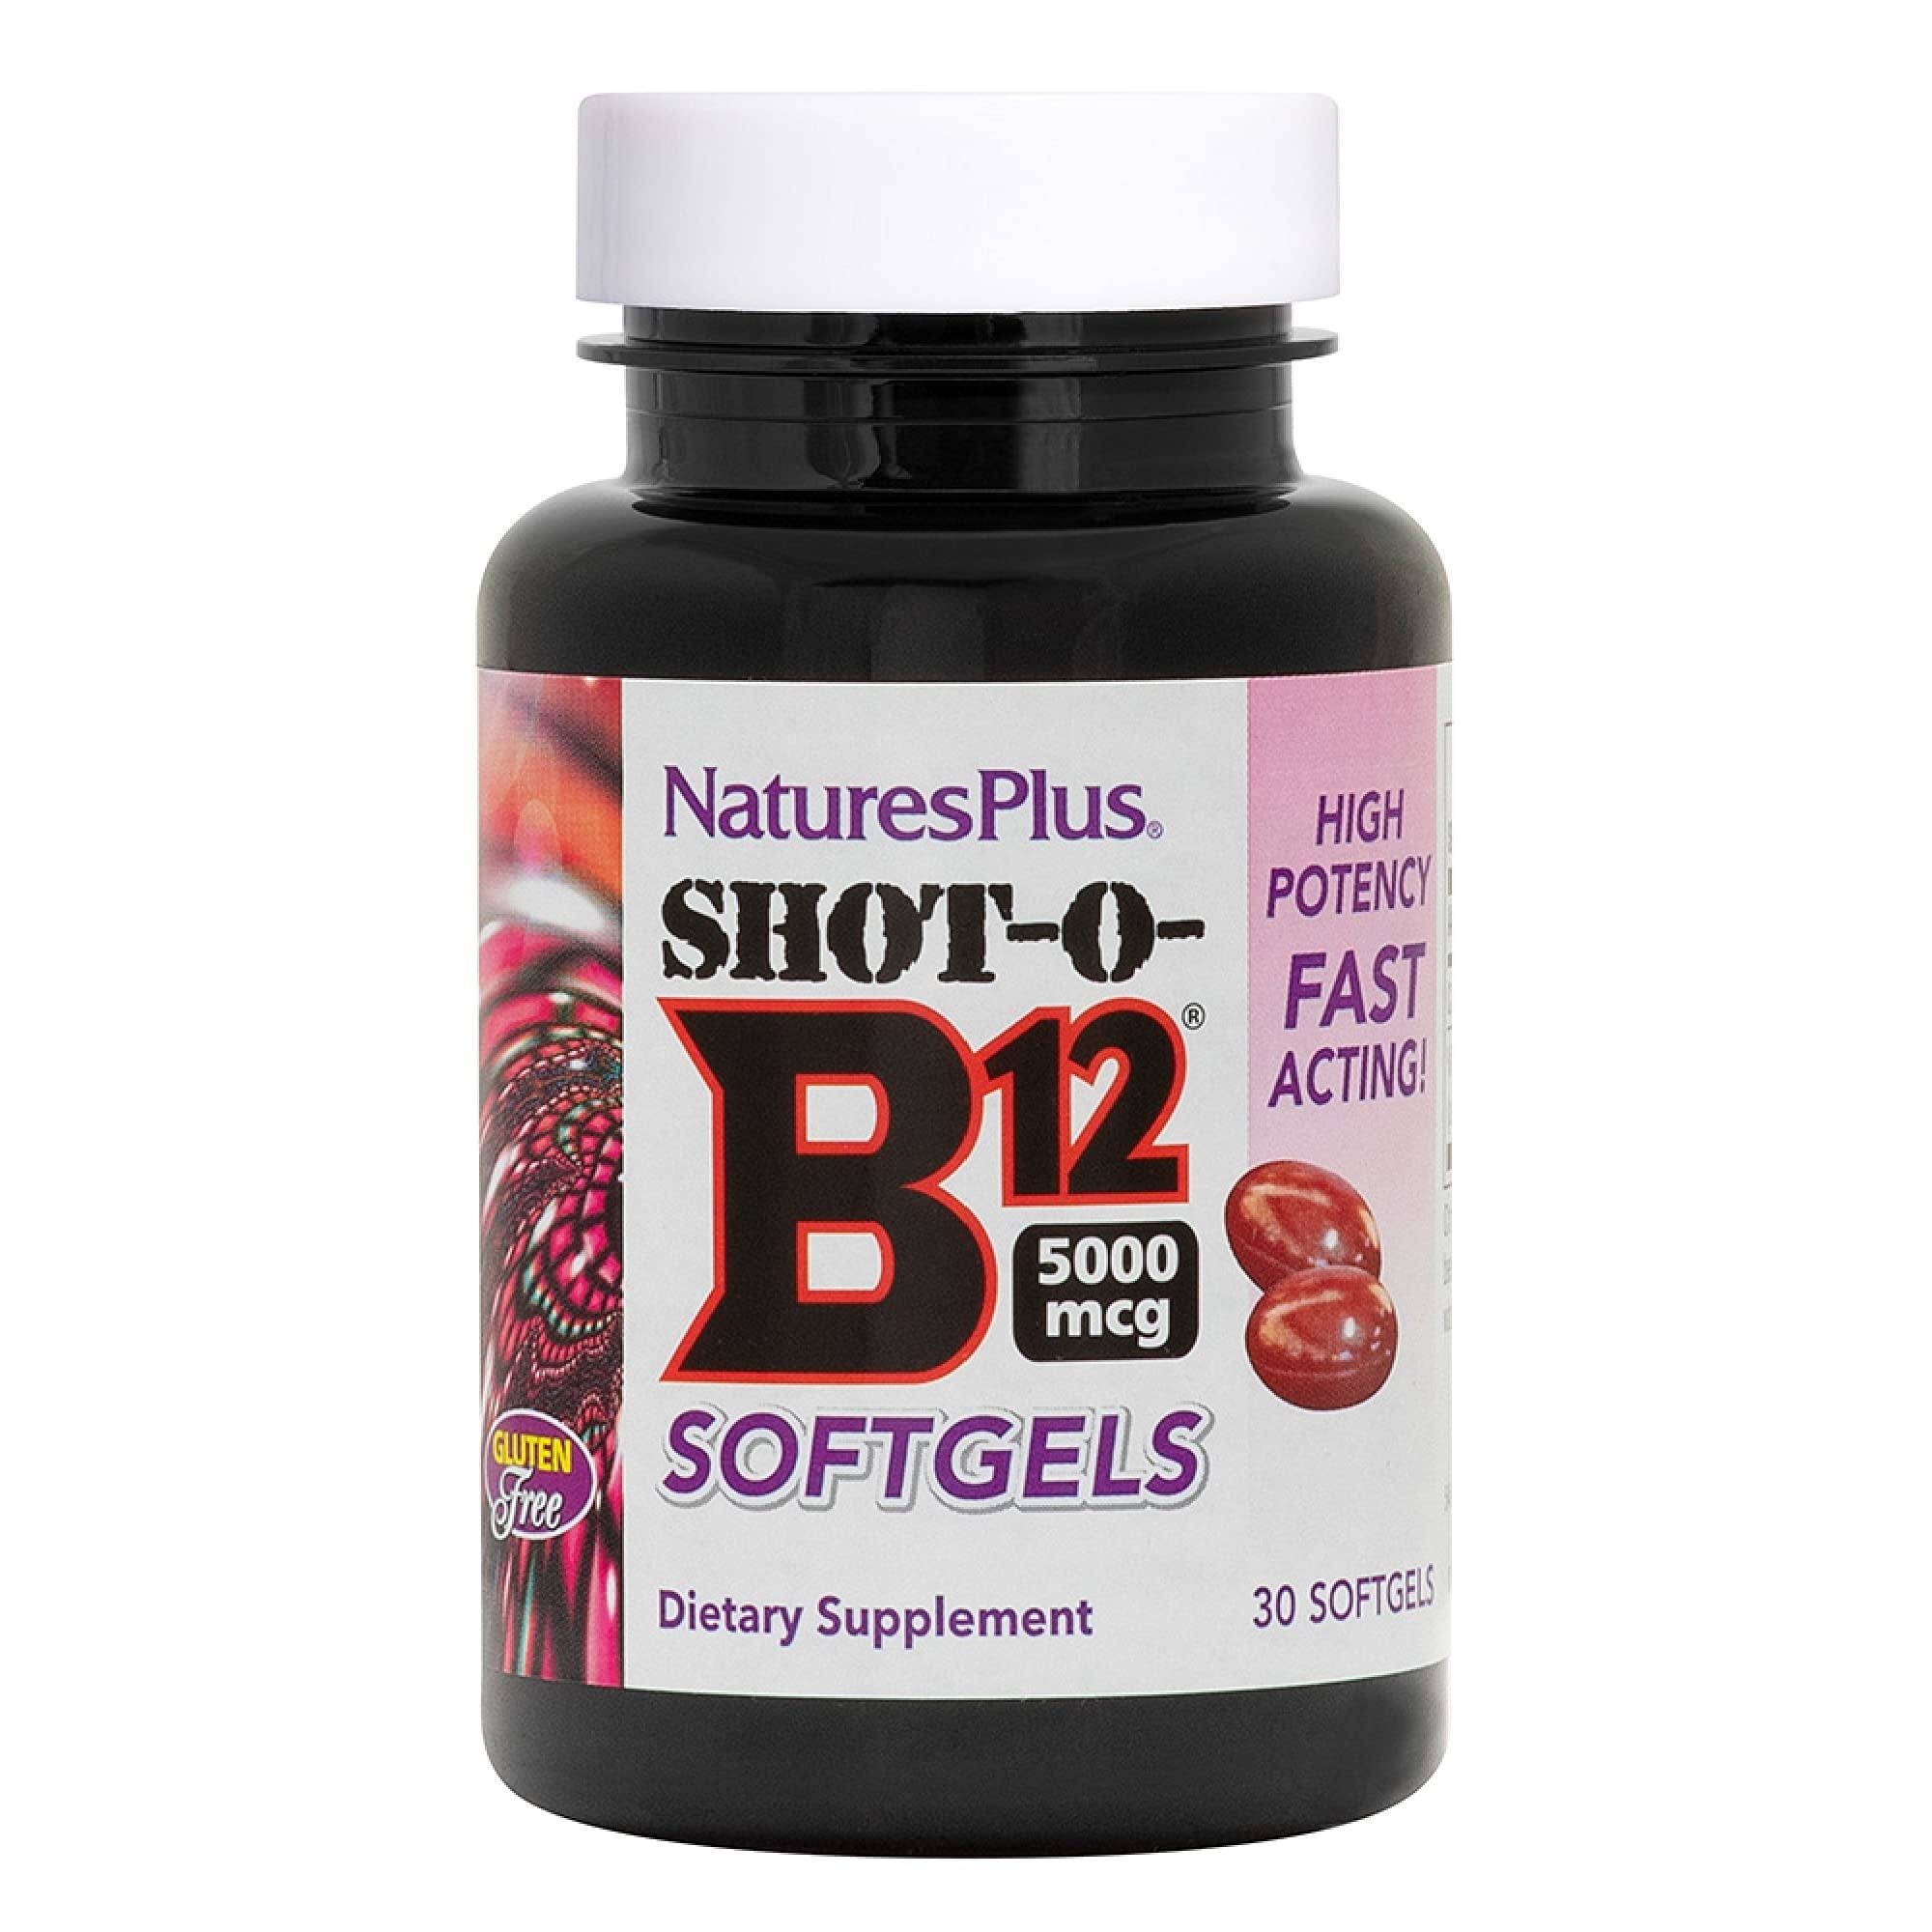 Nature's Plus Shot-O-B12 Supplement - 5000mcg, 30 Softgels